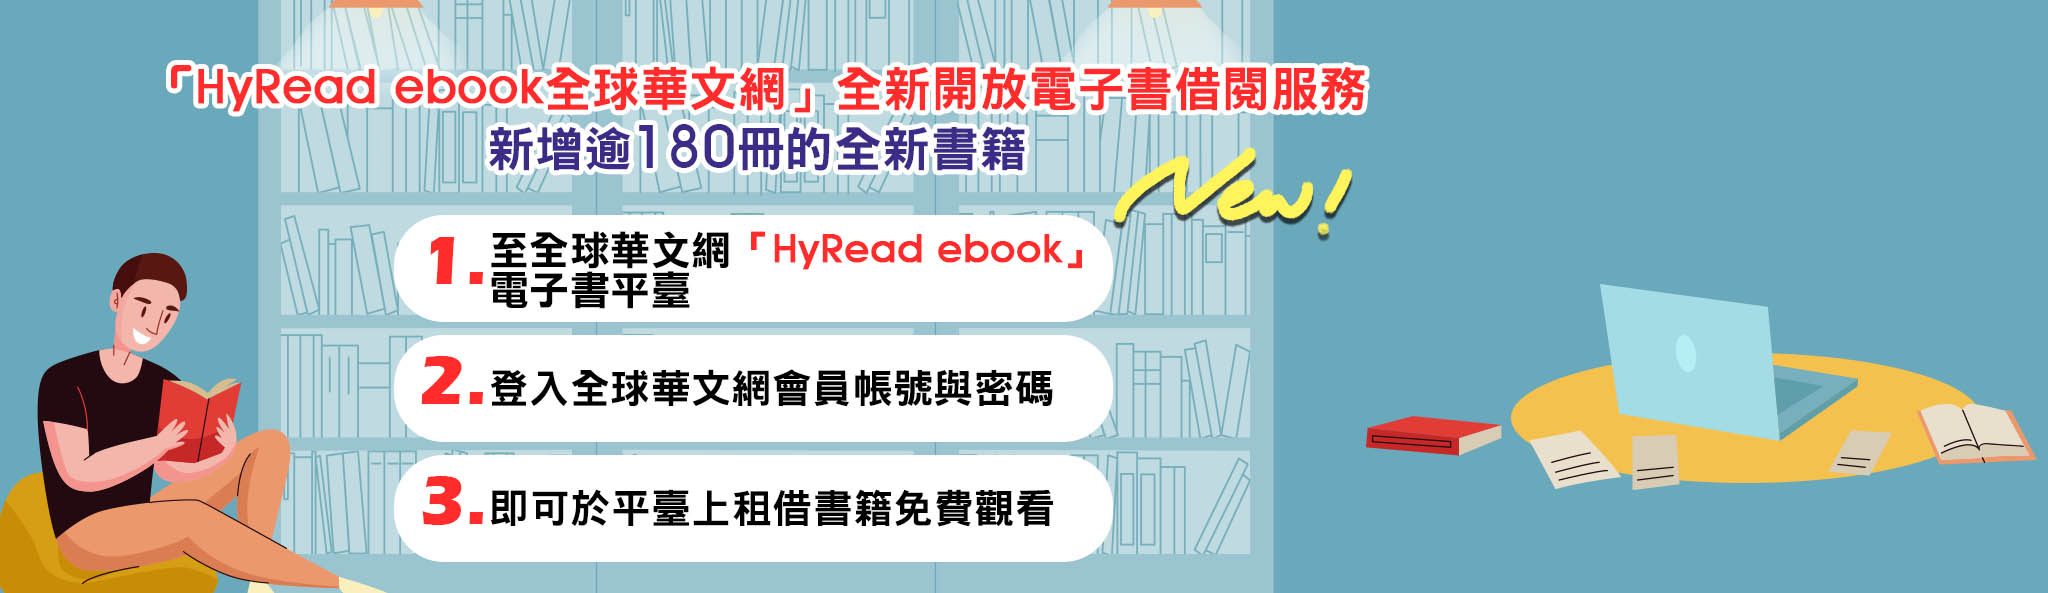 「HyRead ebook全球華文網」全新開放電子書借閱服務